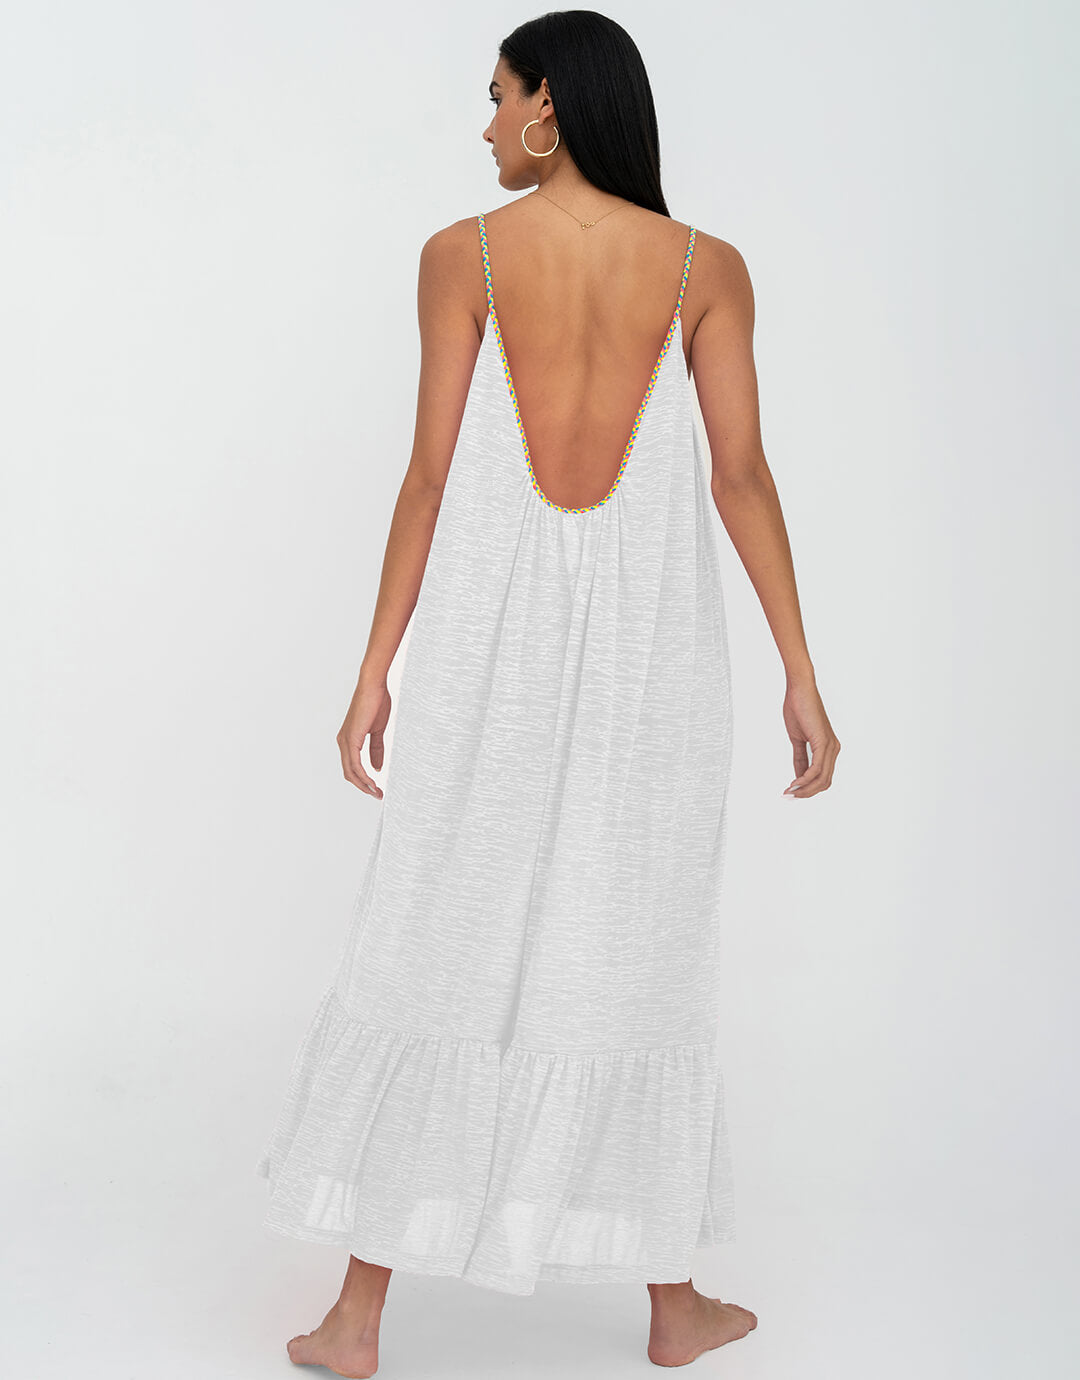 Braided Low Back Dress - White - Simply Beach UK